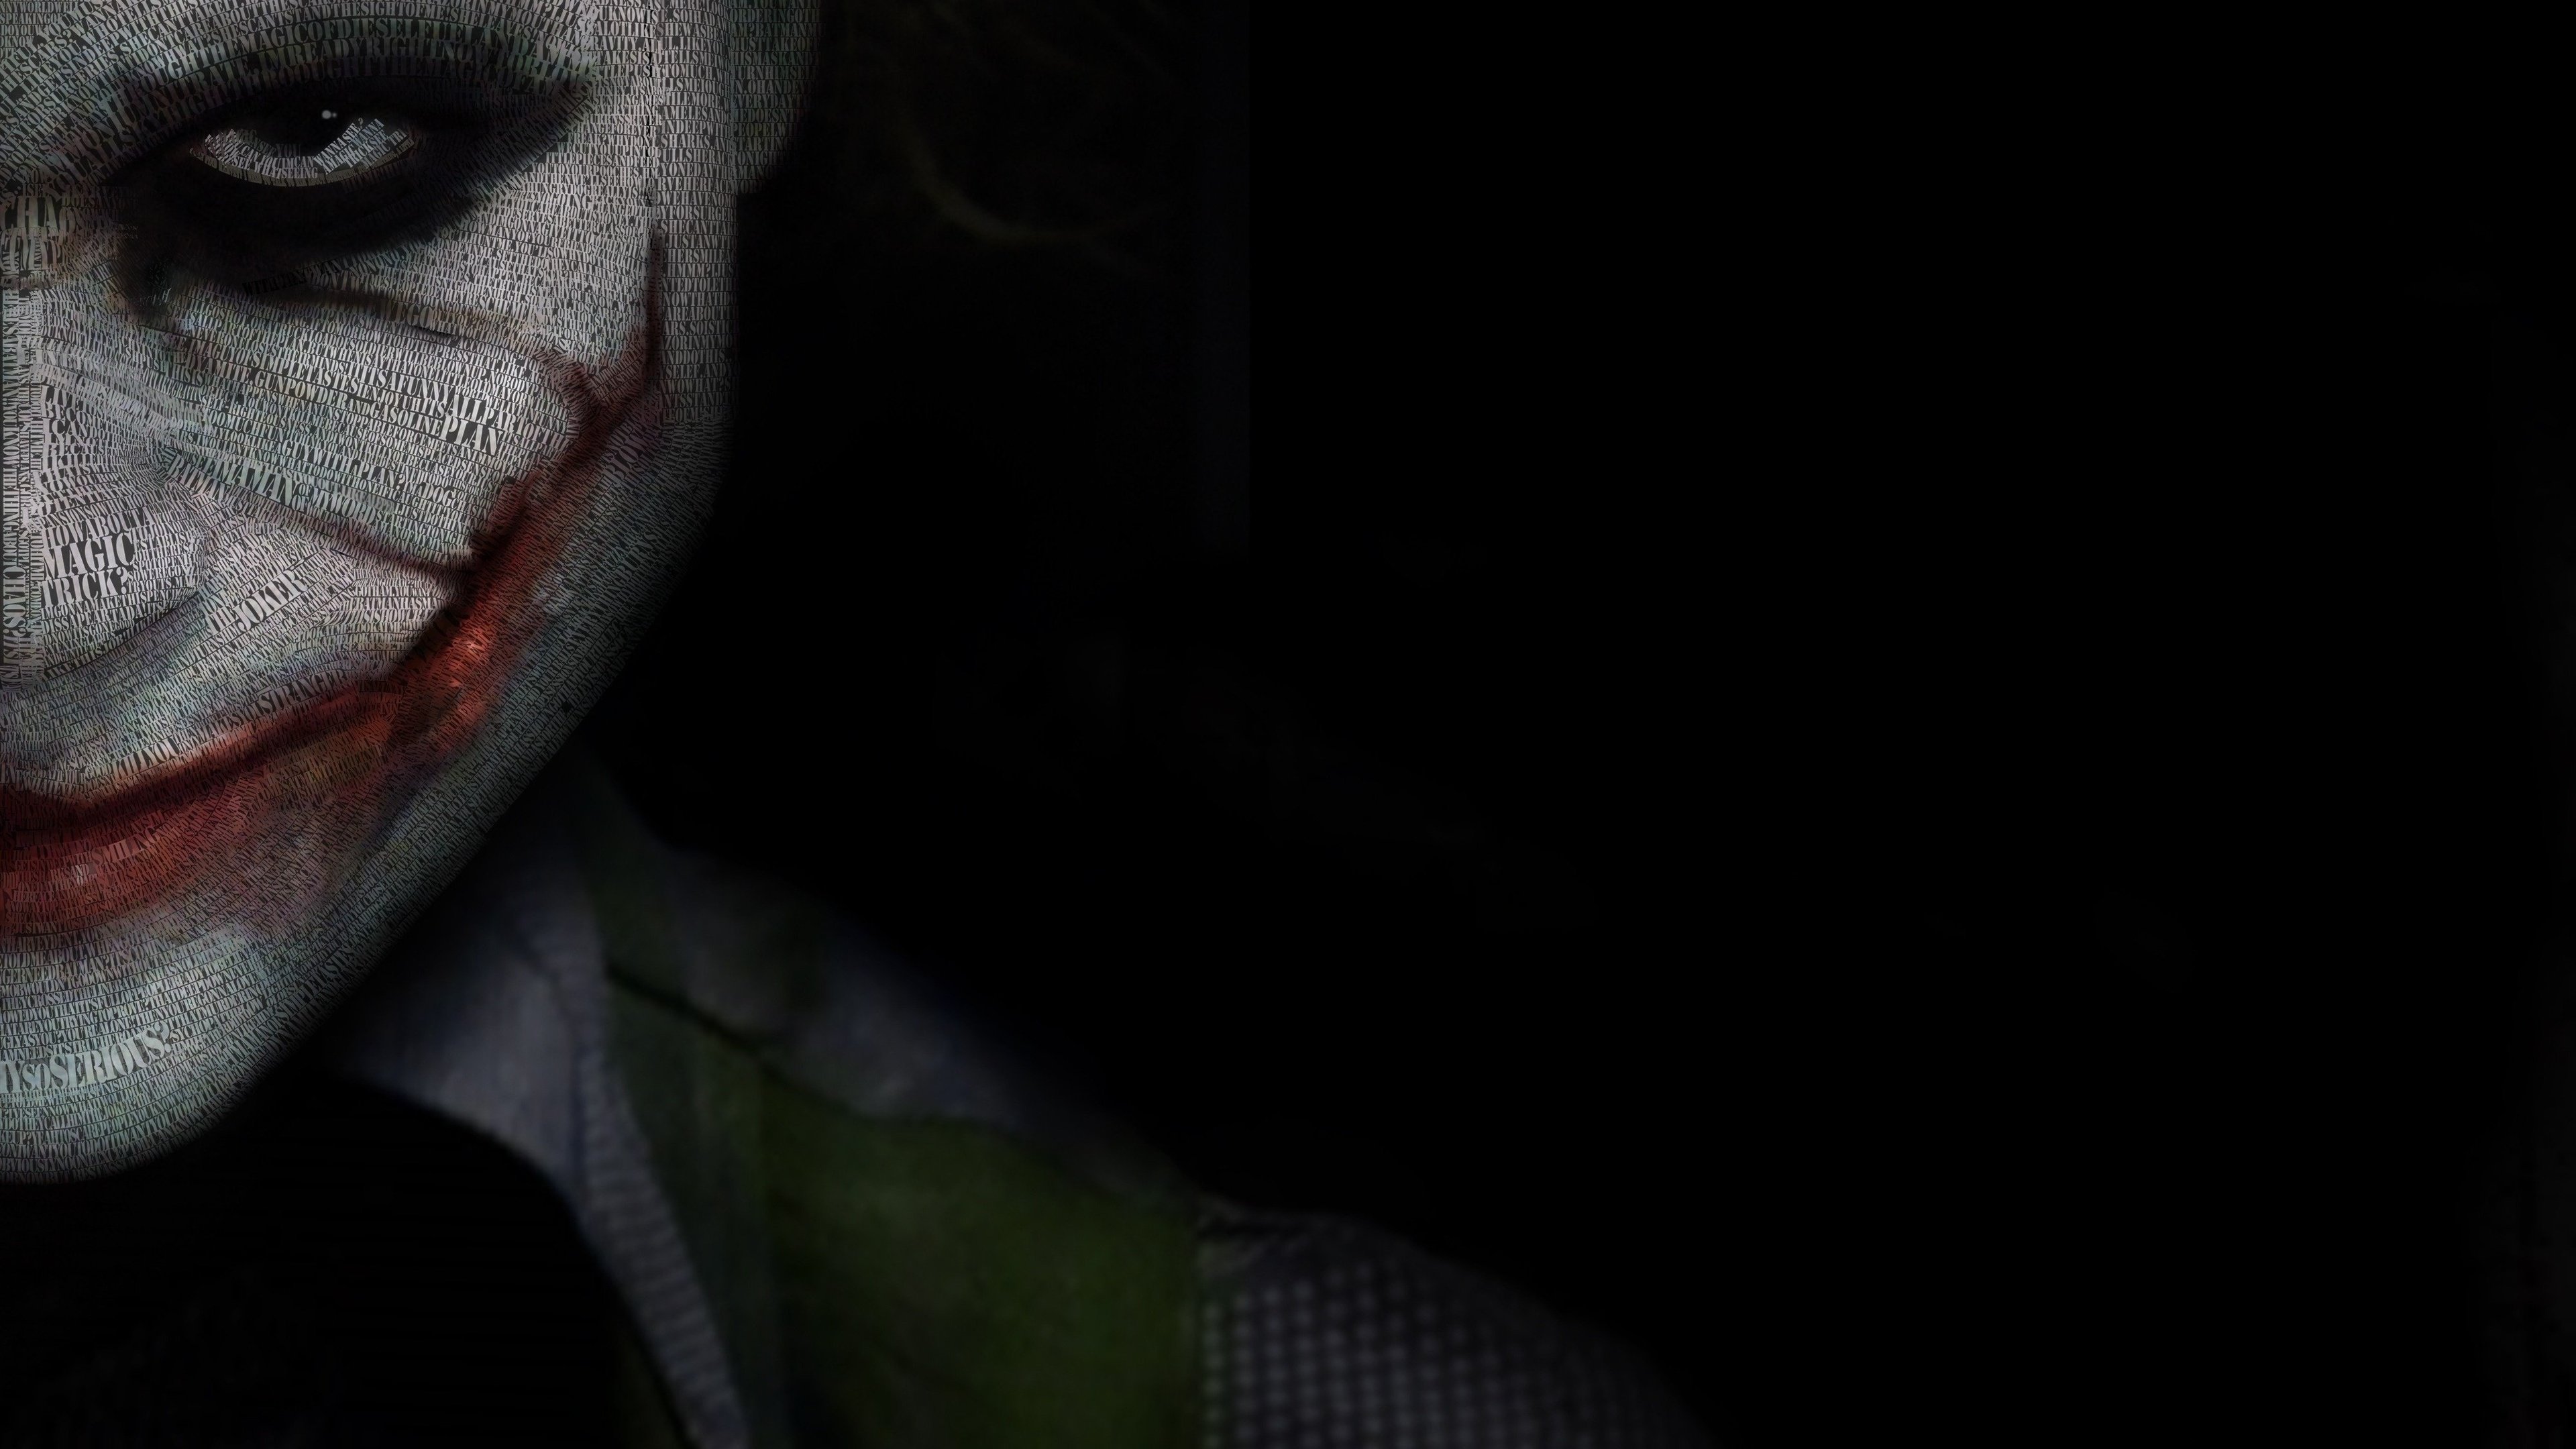 Scary Joker Minimal 4K Wallpapers